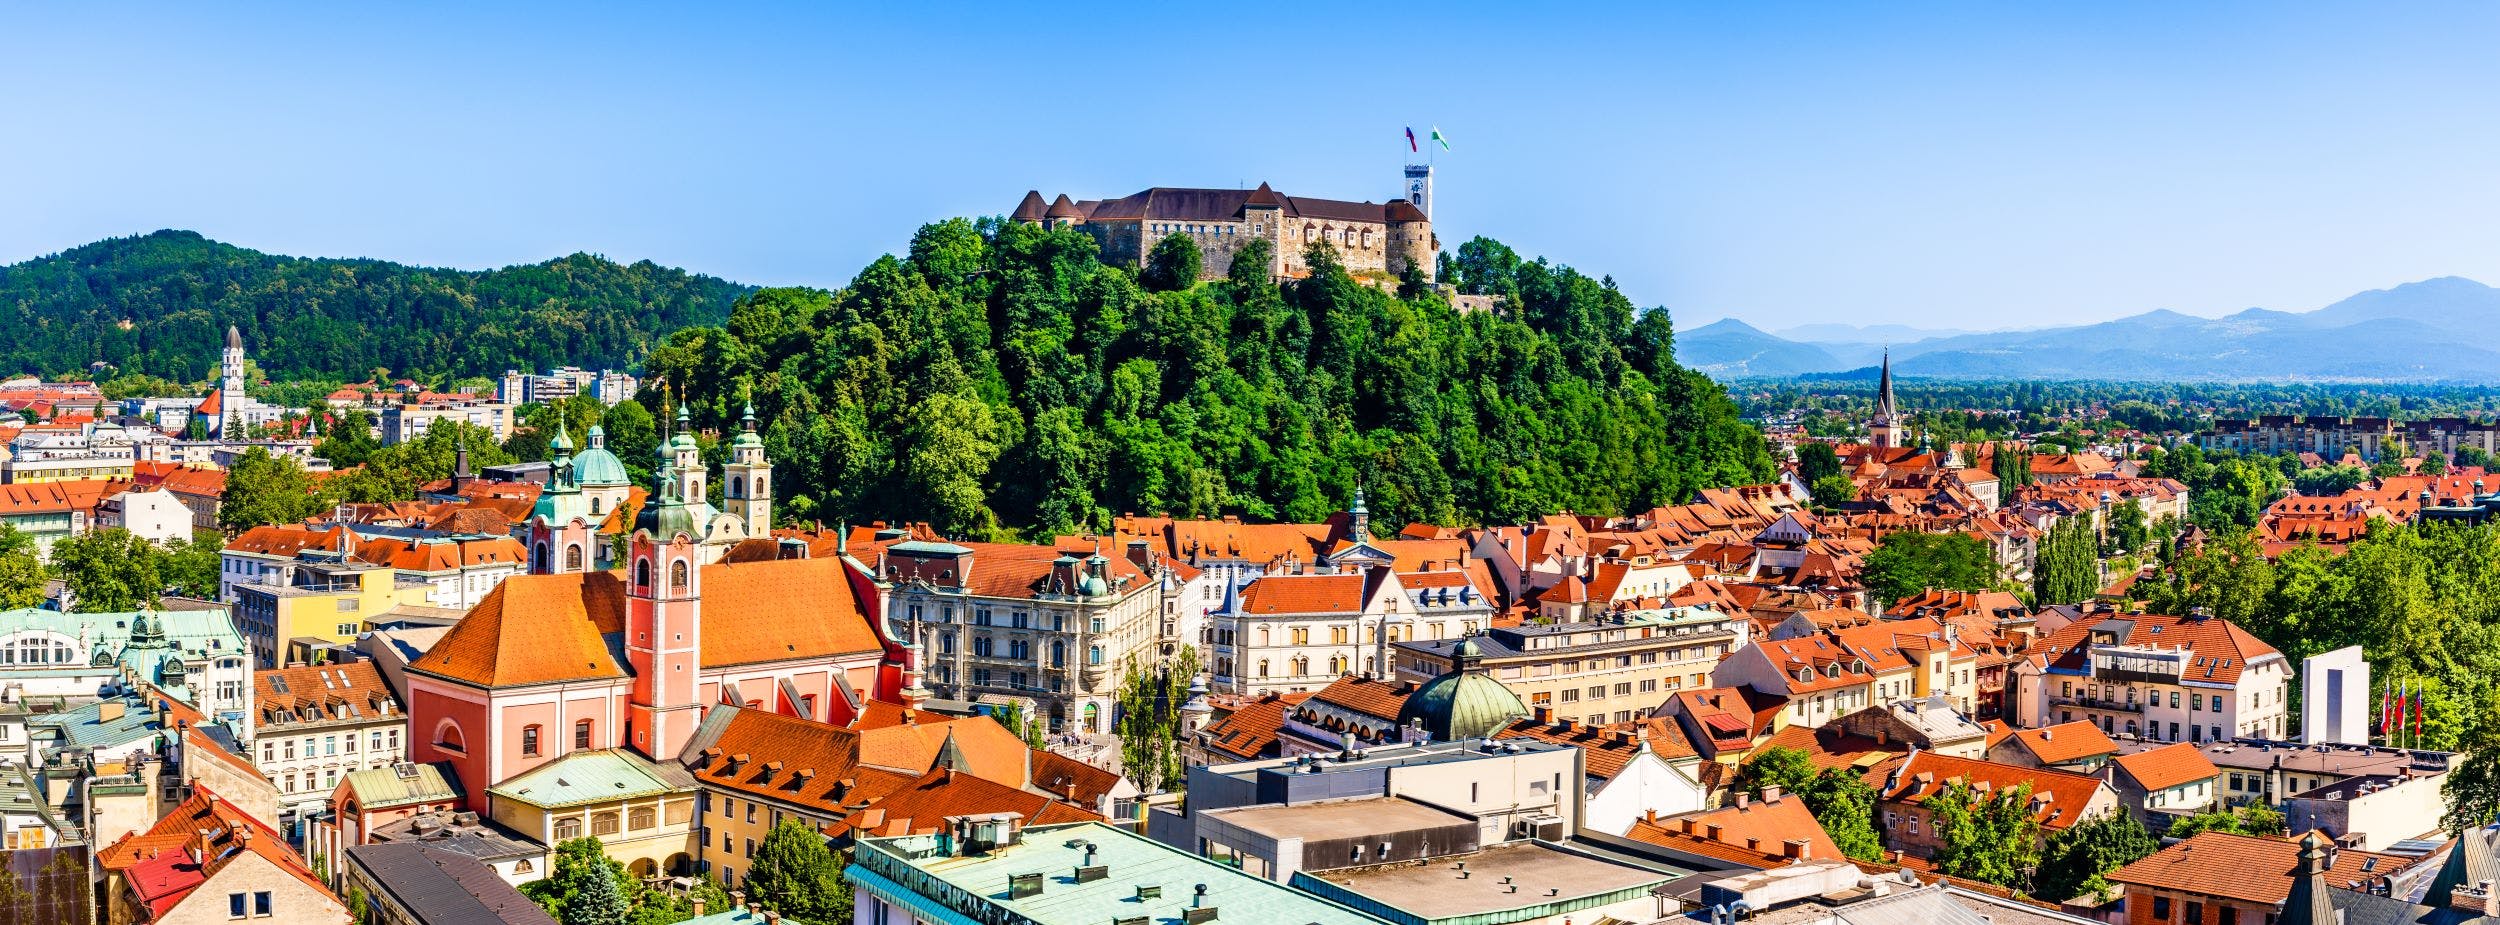 Ljubljana city tour and castle from the Coast